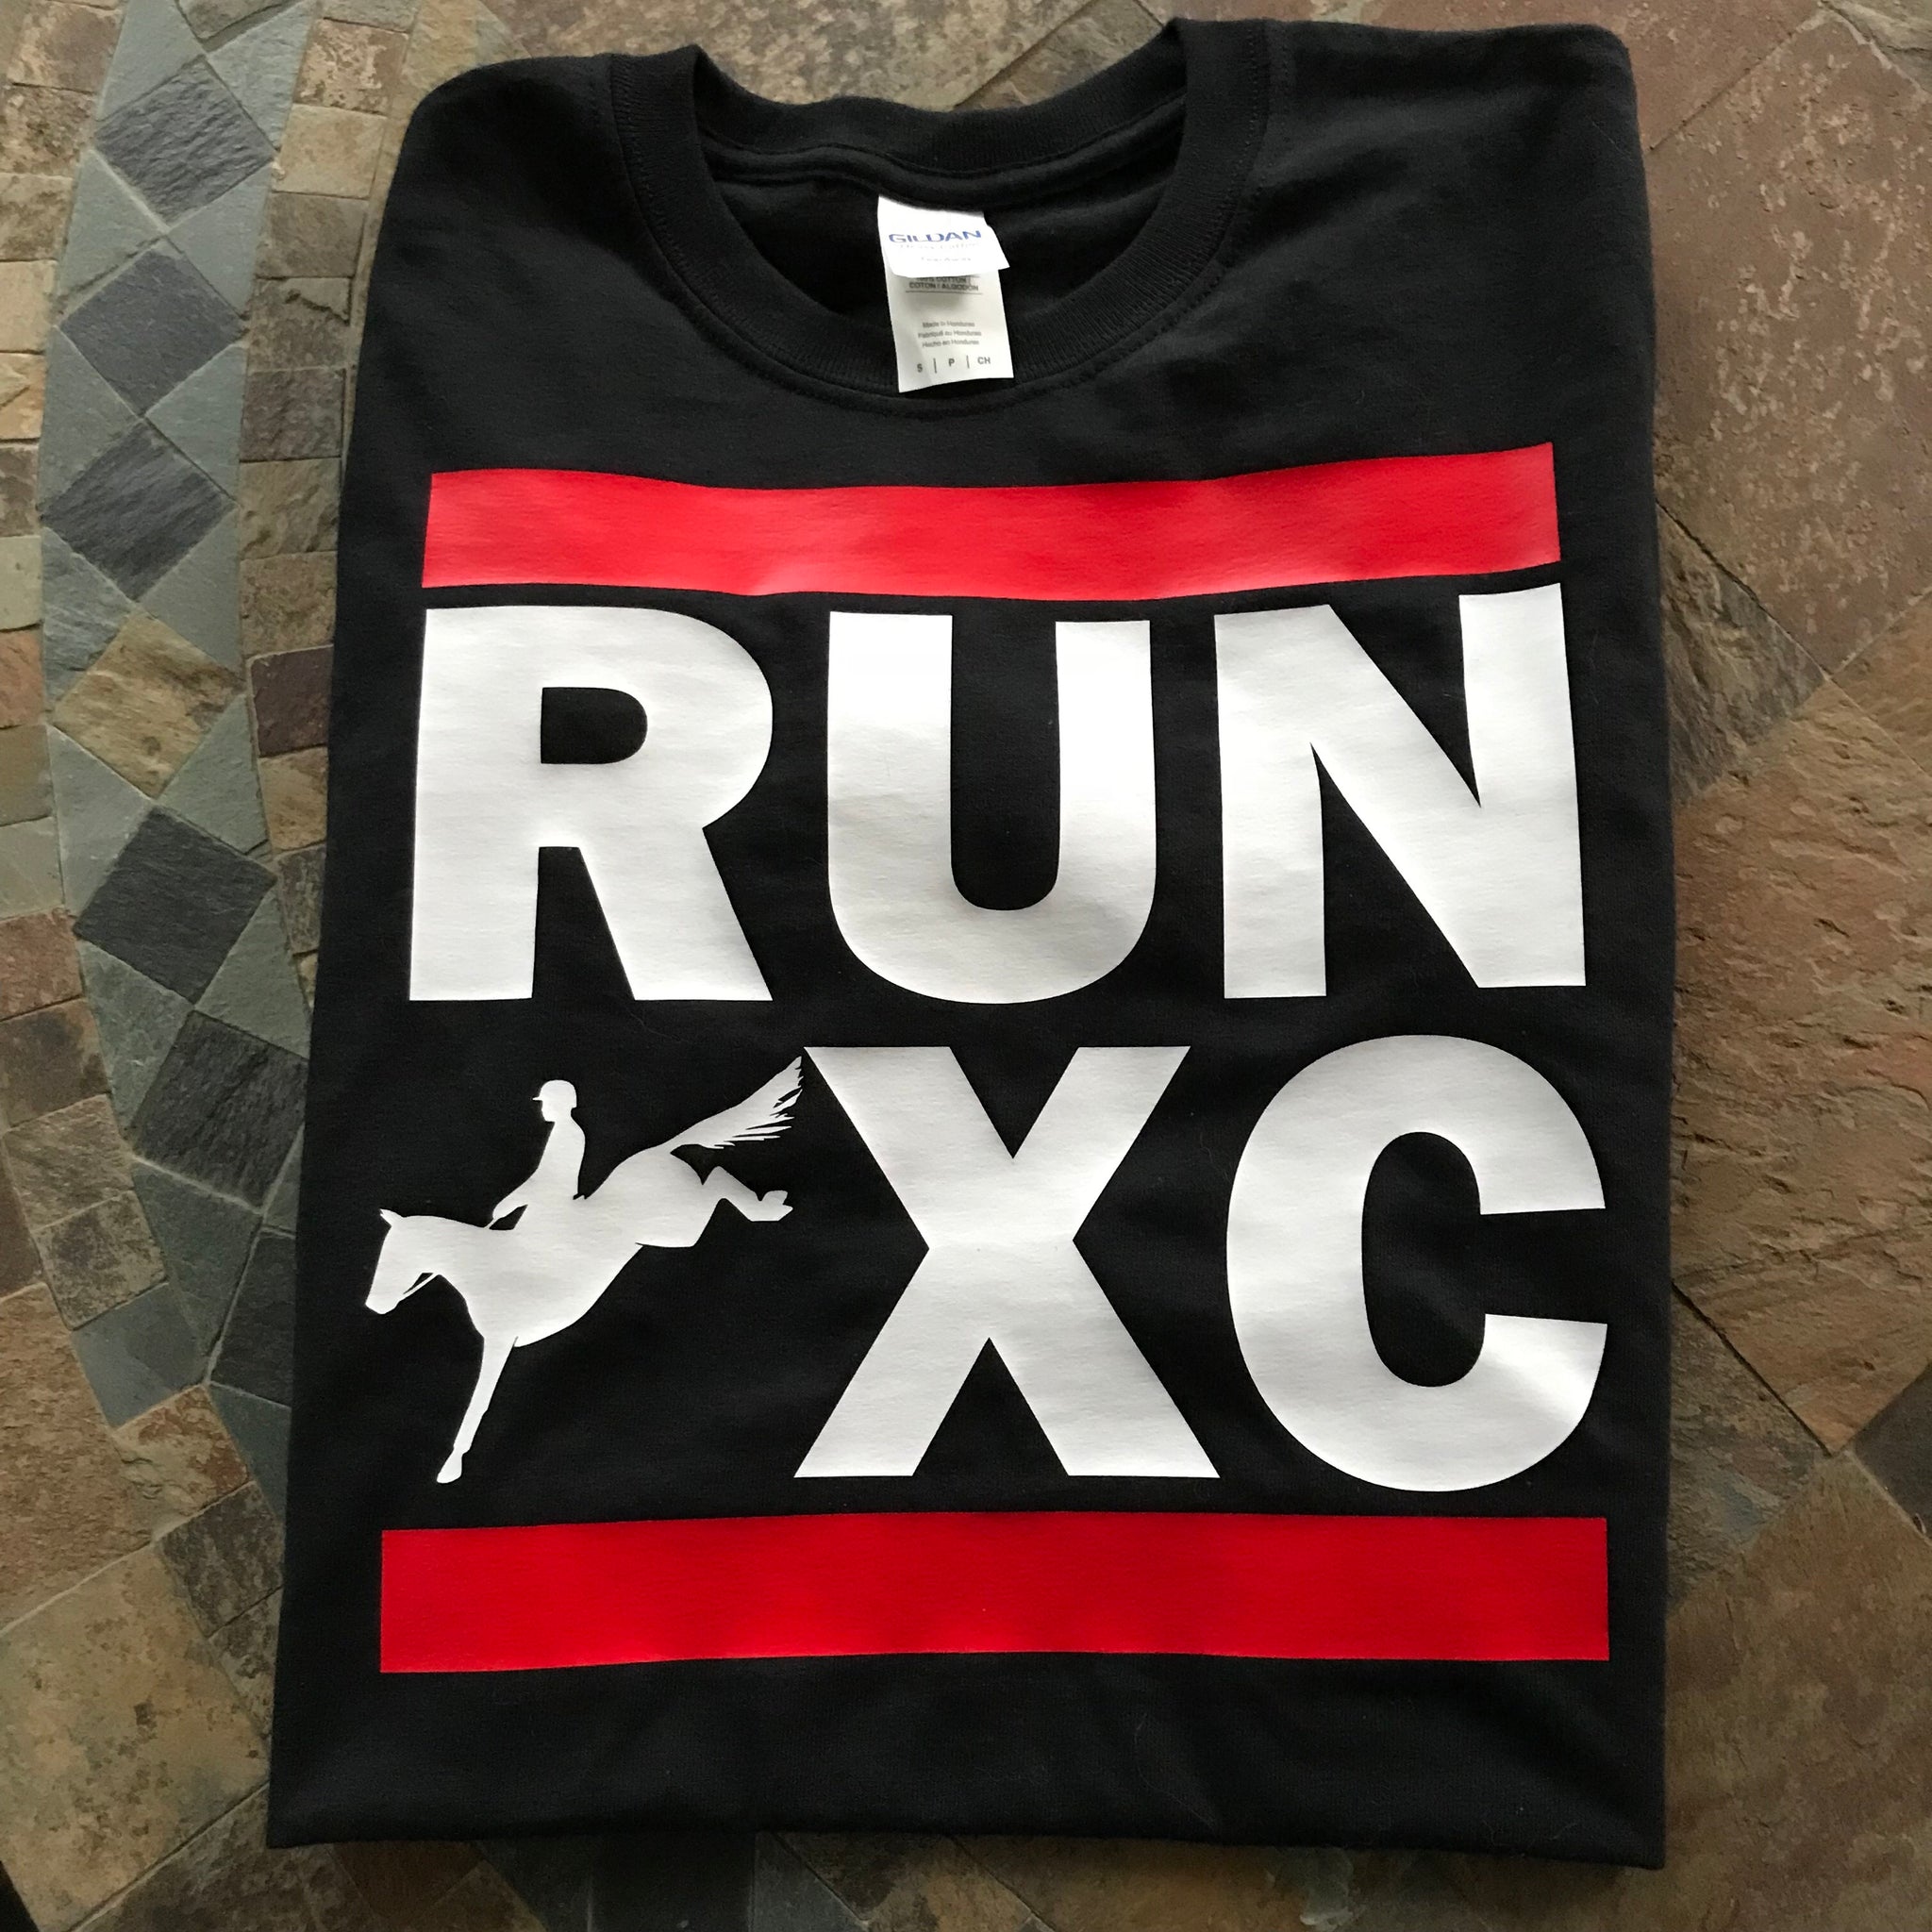 The Run XC Tee